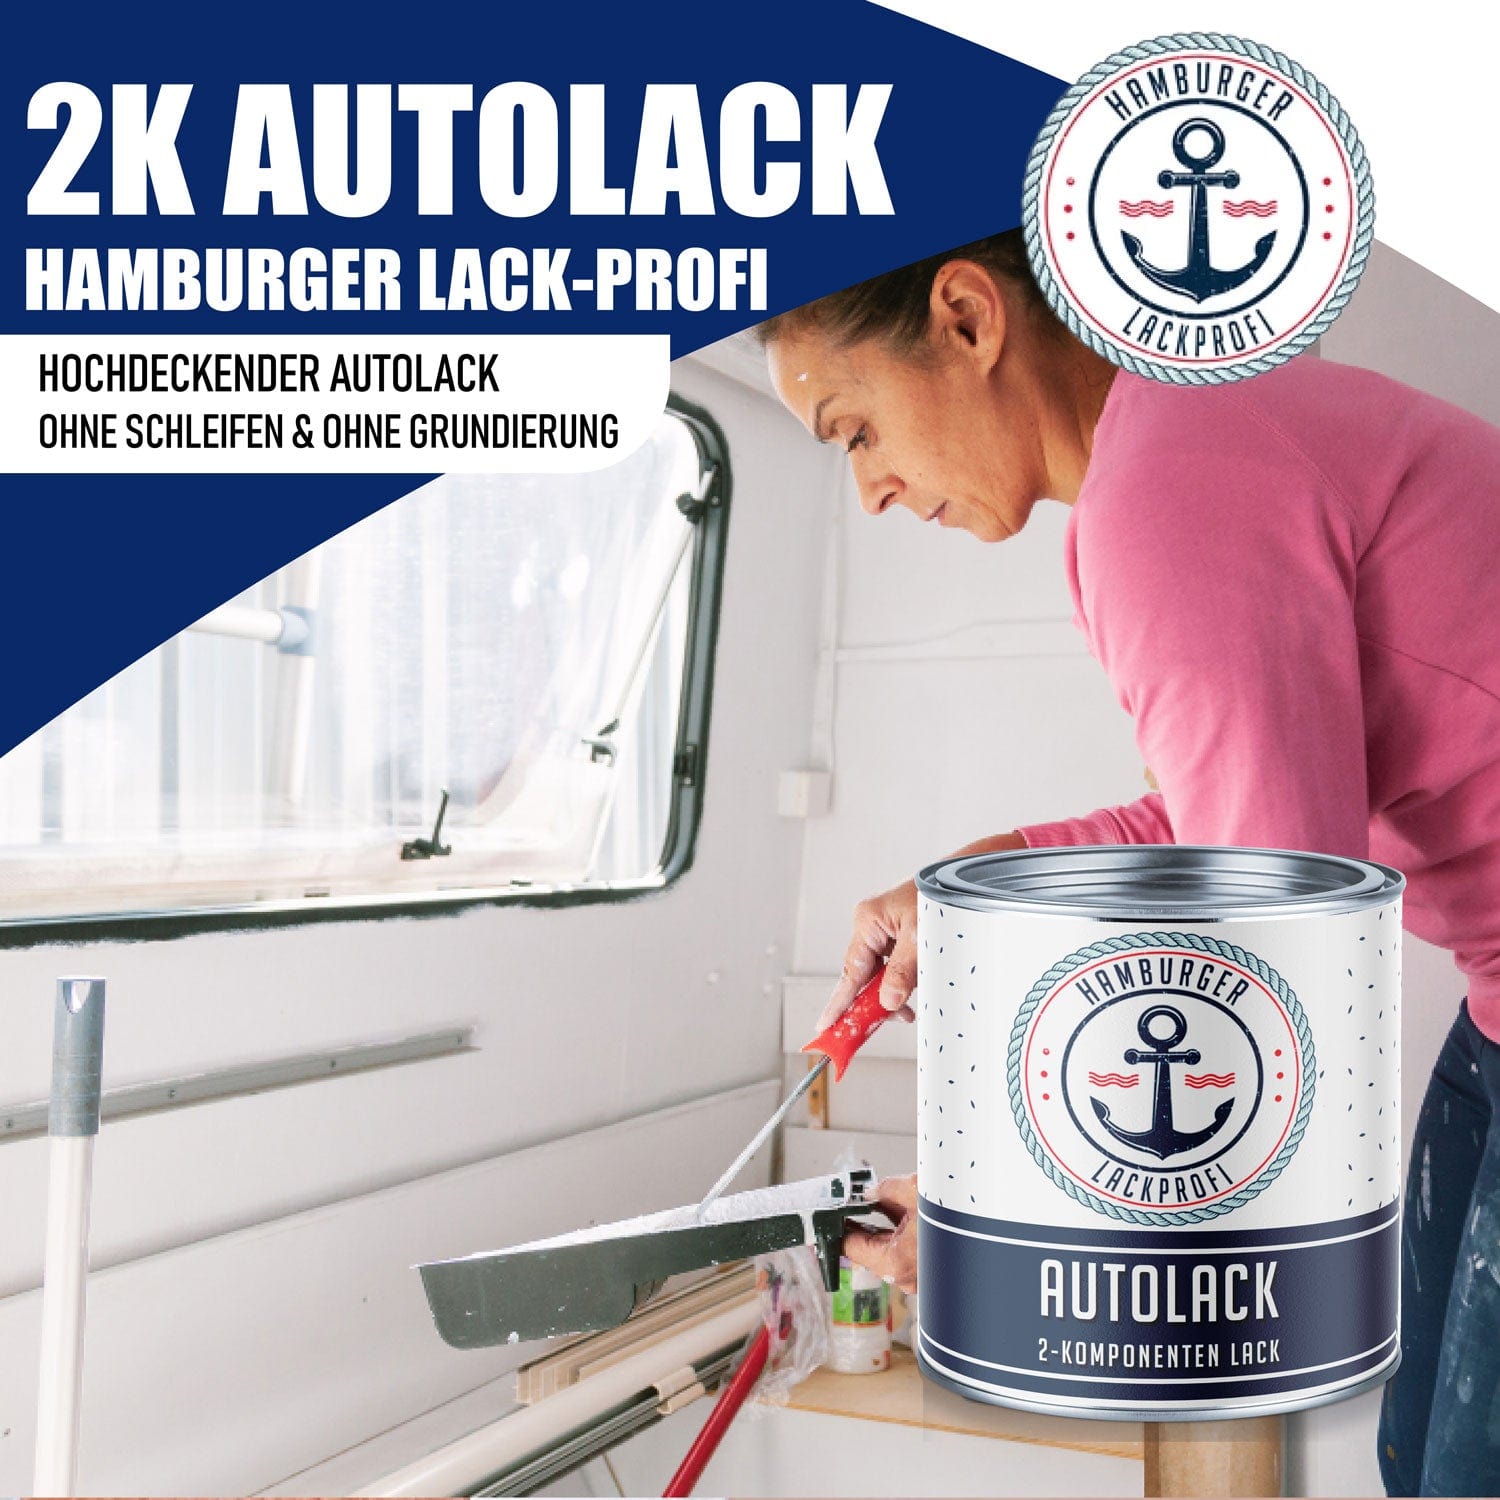 Hamburger Lack-Profi Lacke & Beschichtungen Hamburger Lack-Profi 2K Autolack in Mausgrau RAL 7005 mit Lackierset (X300) & Verdünnung (1 L) - 30% Sparangebot